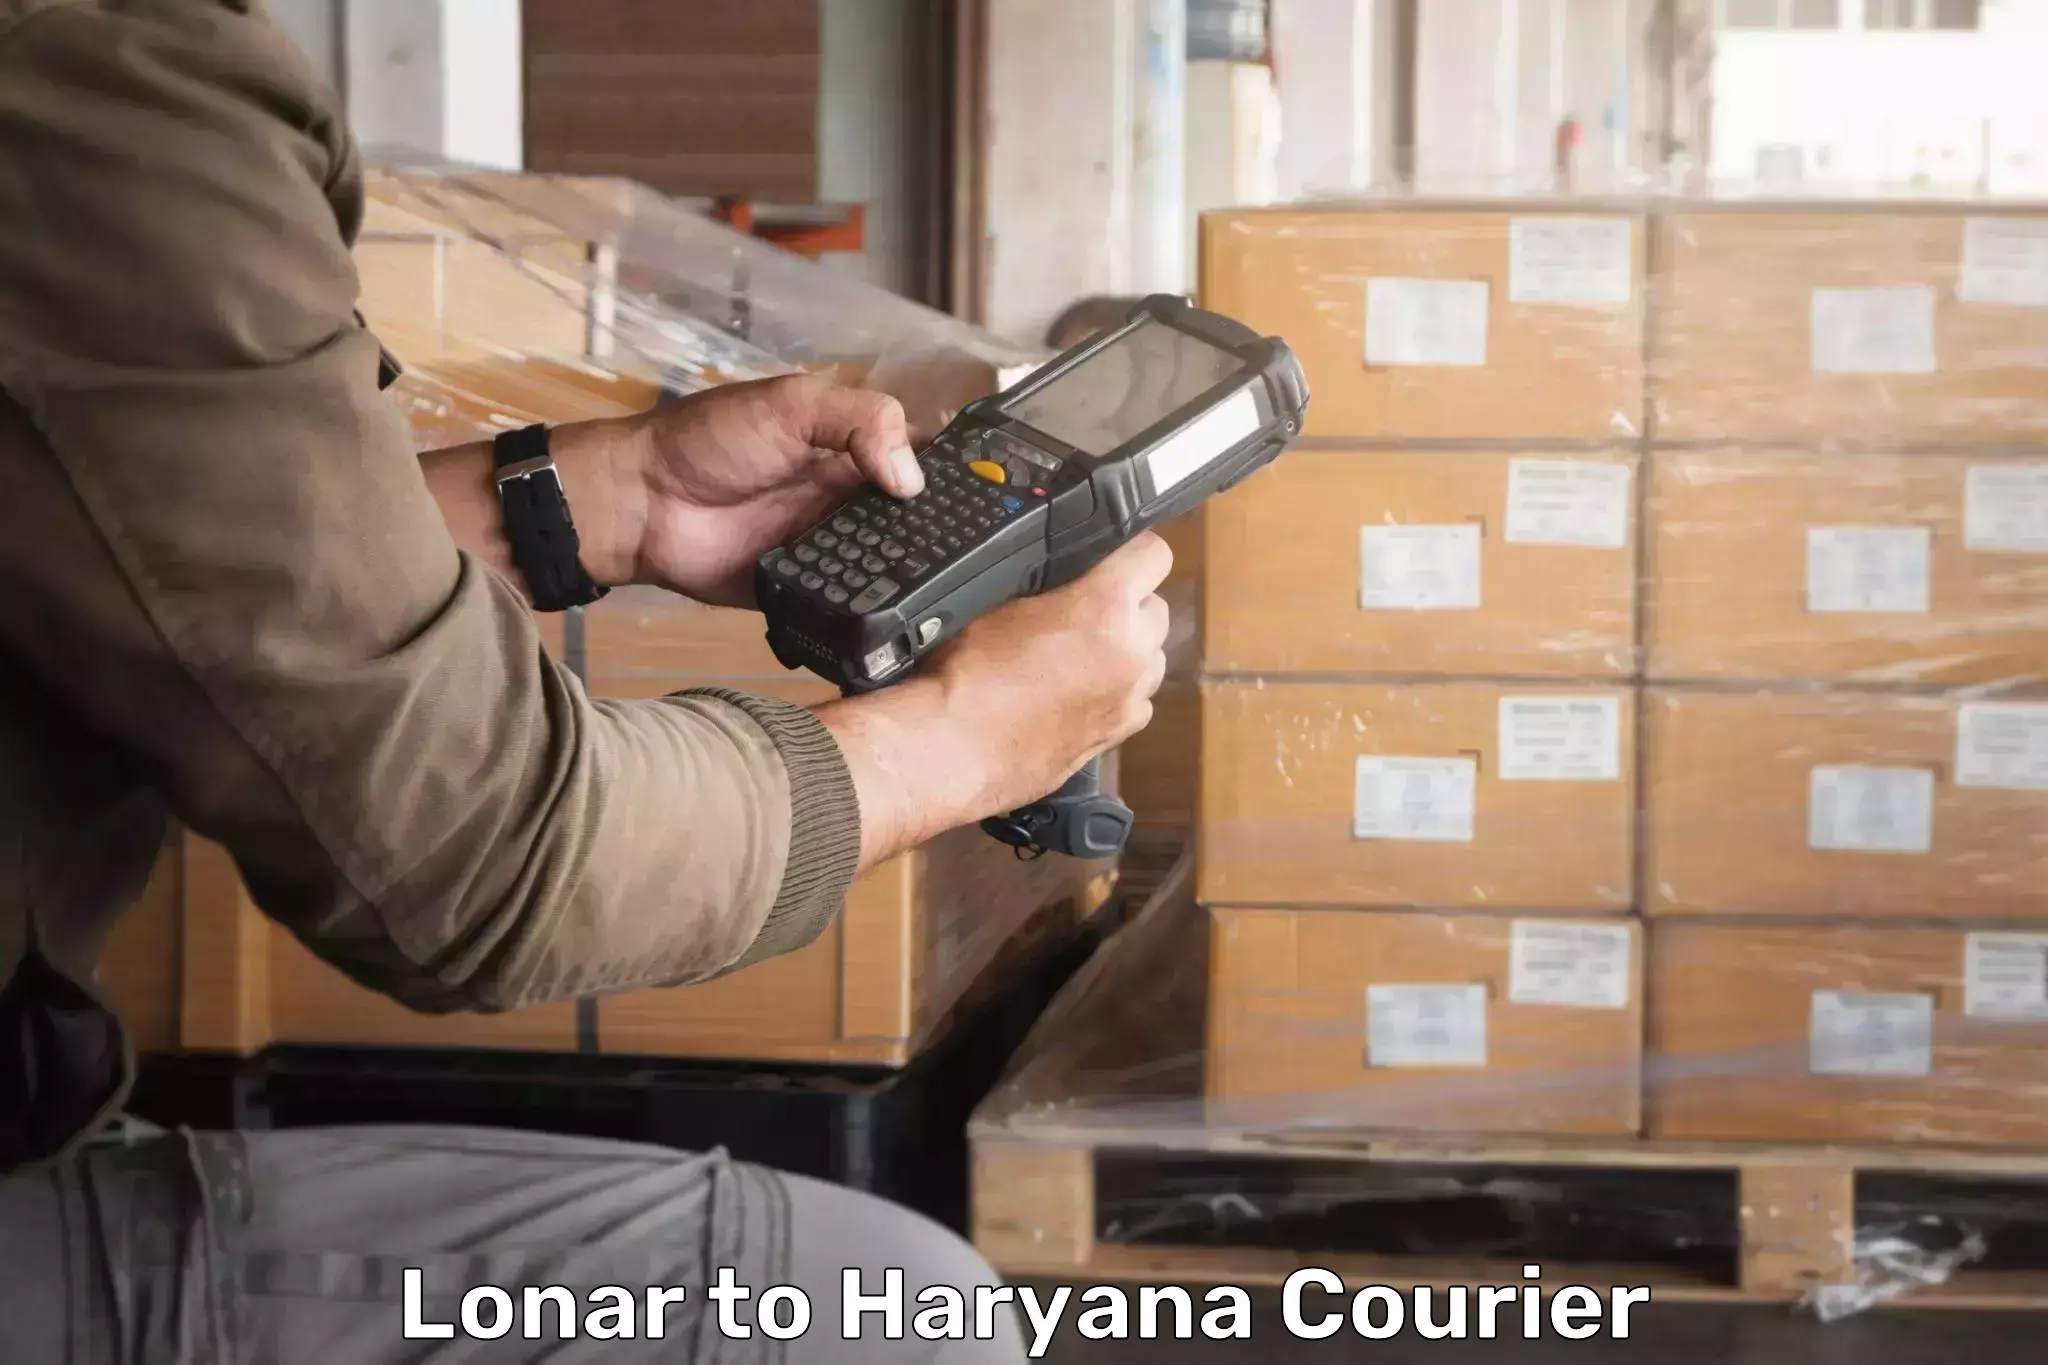 Advanced shipping network Lonar to Hansi